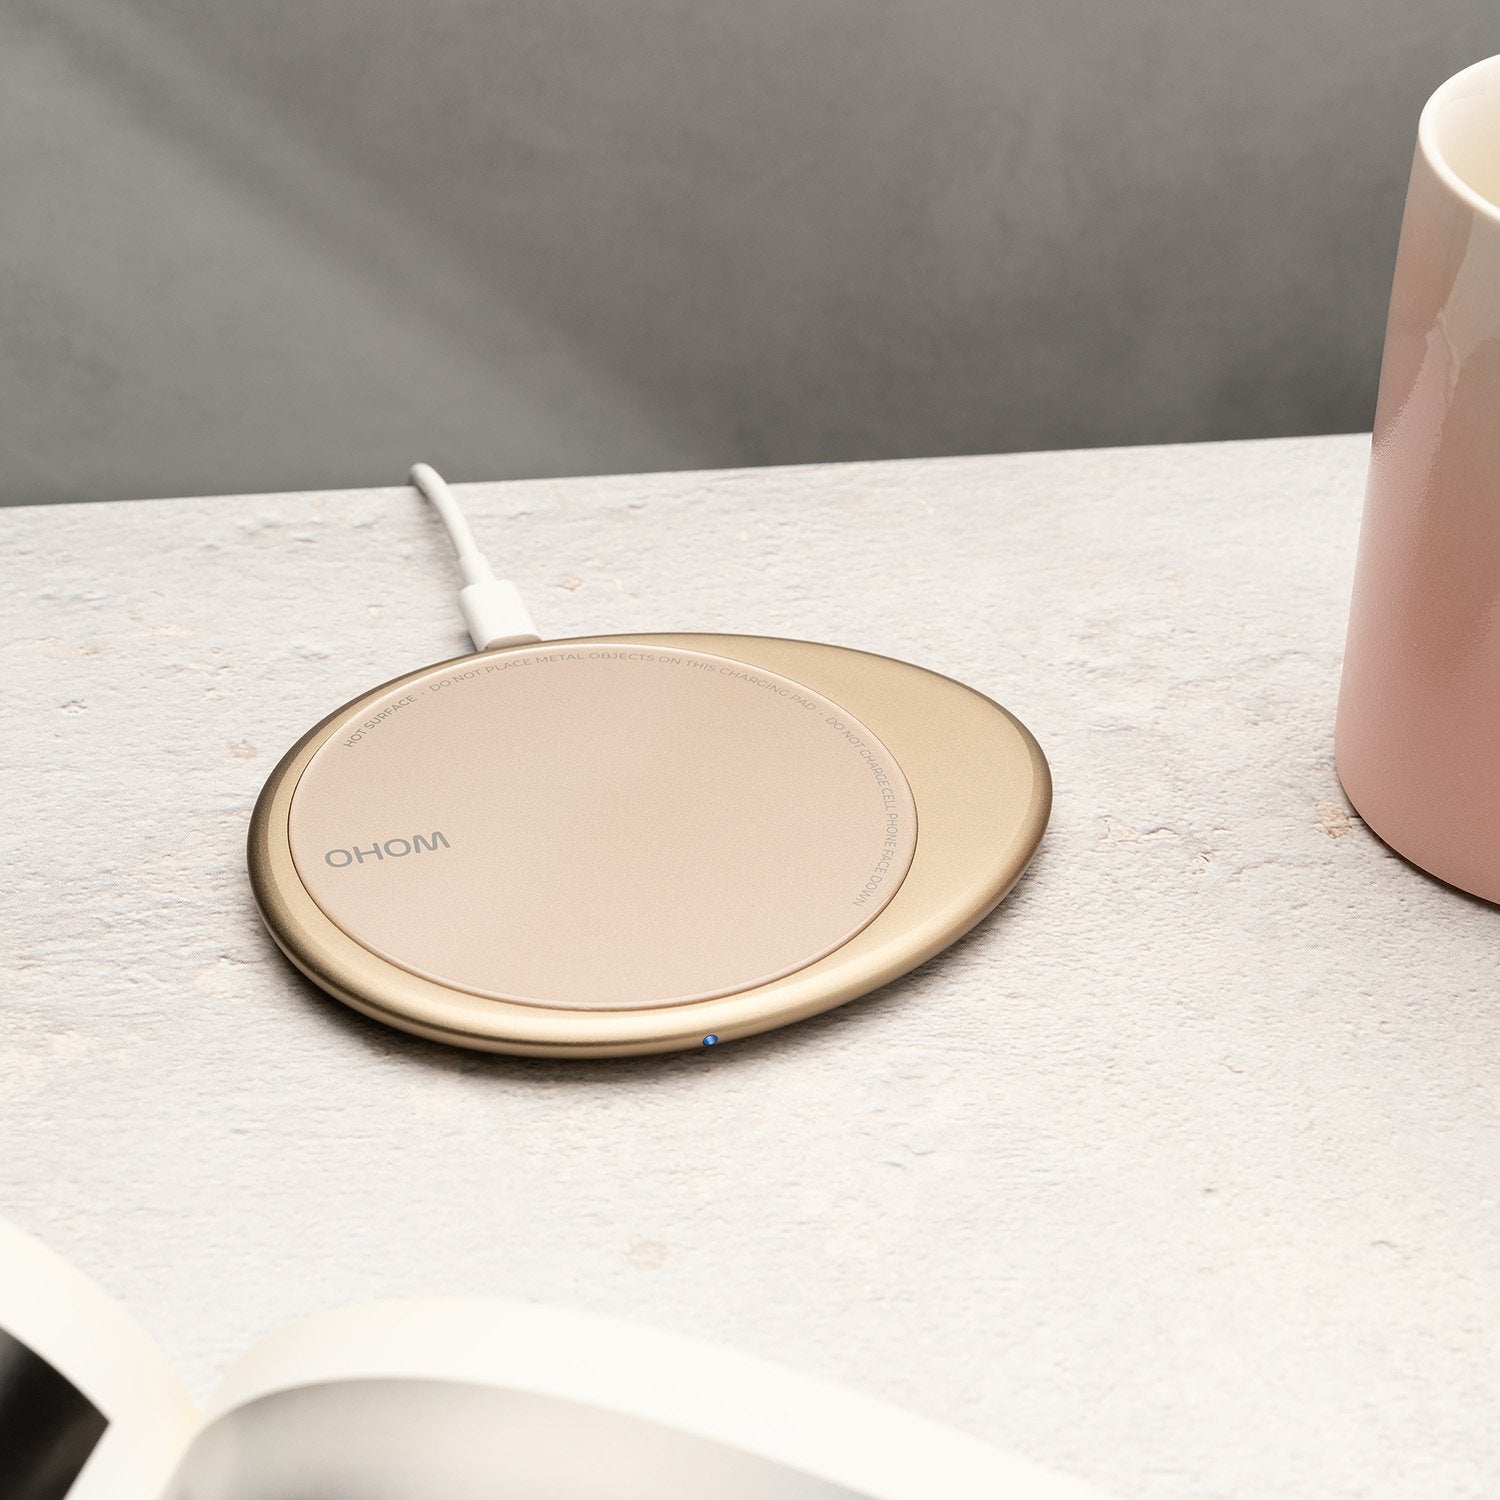 Pink pebble charging pad next to pink mug with design